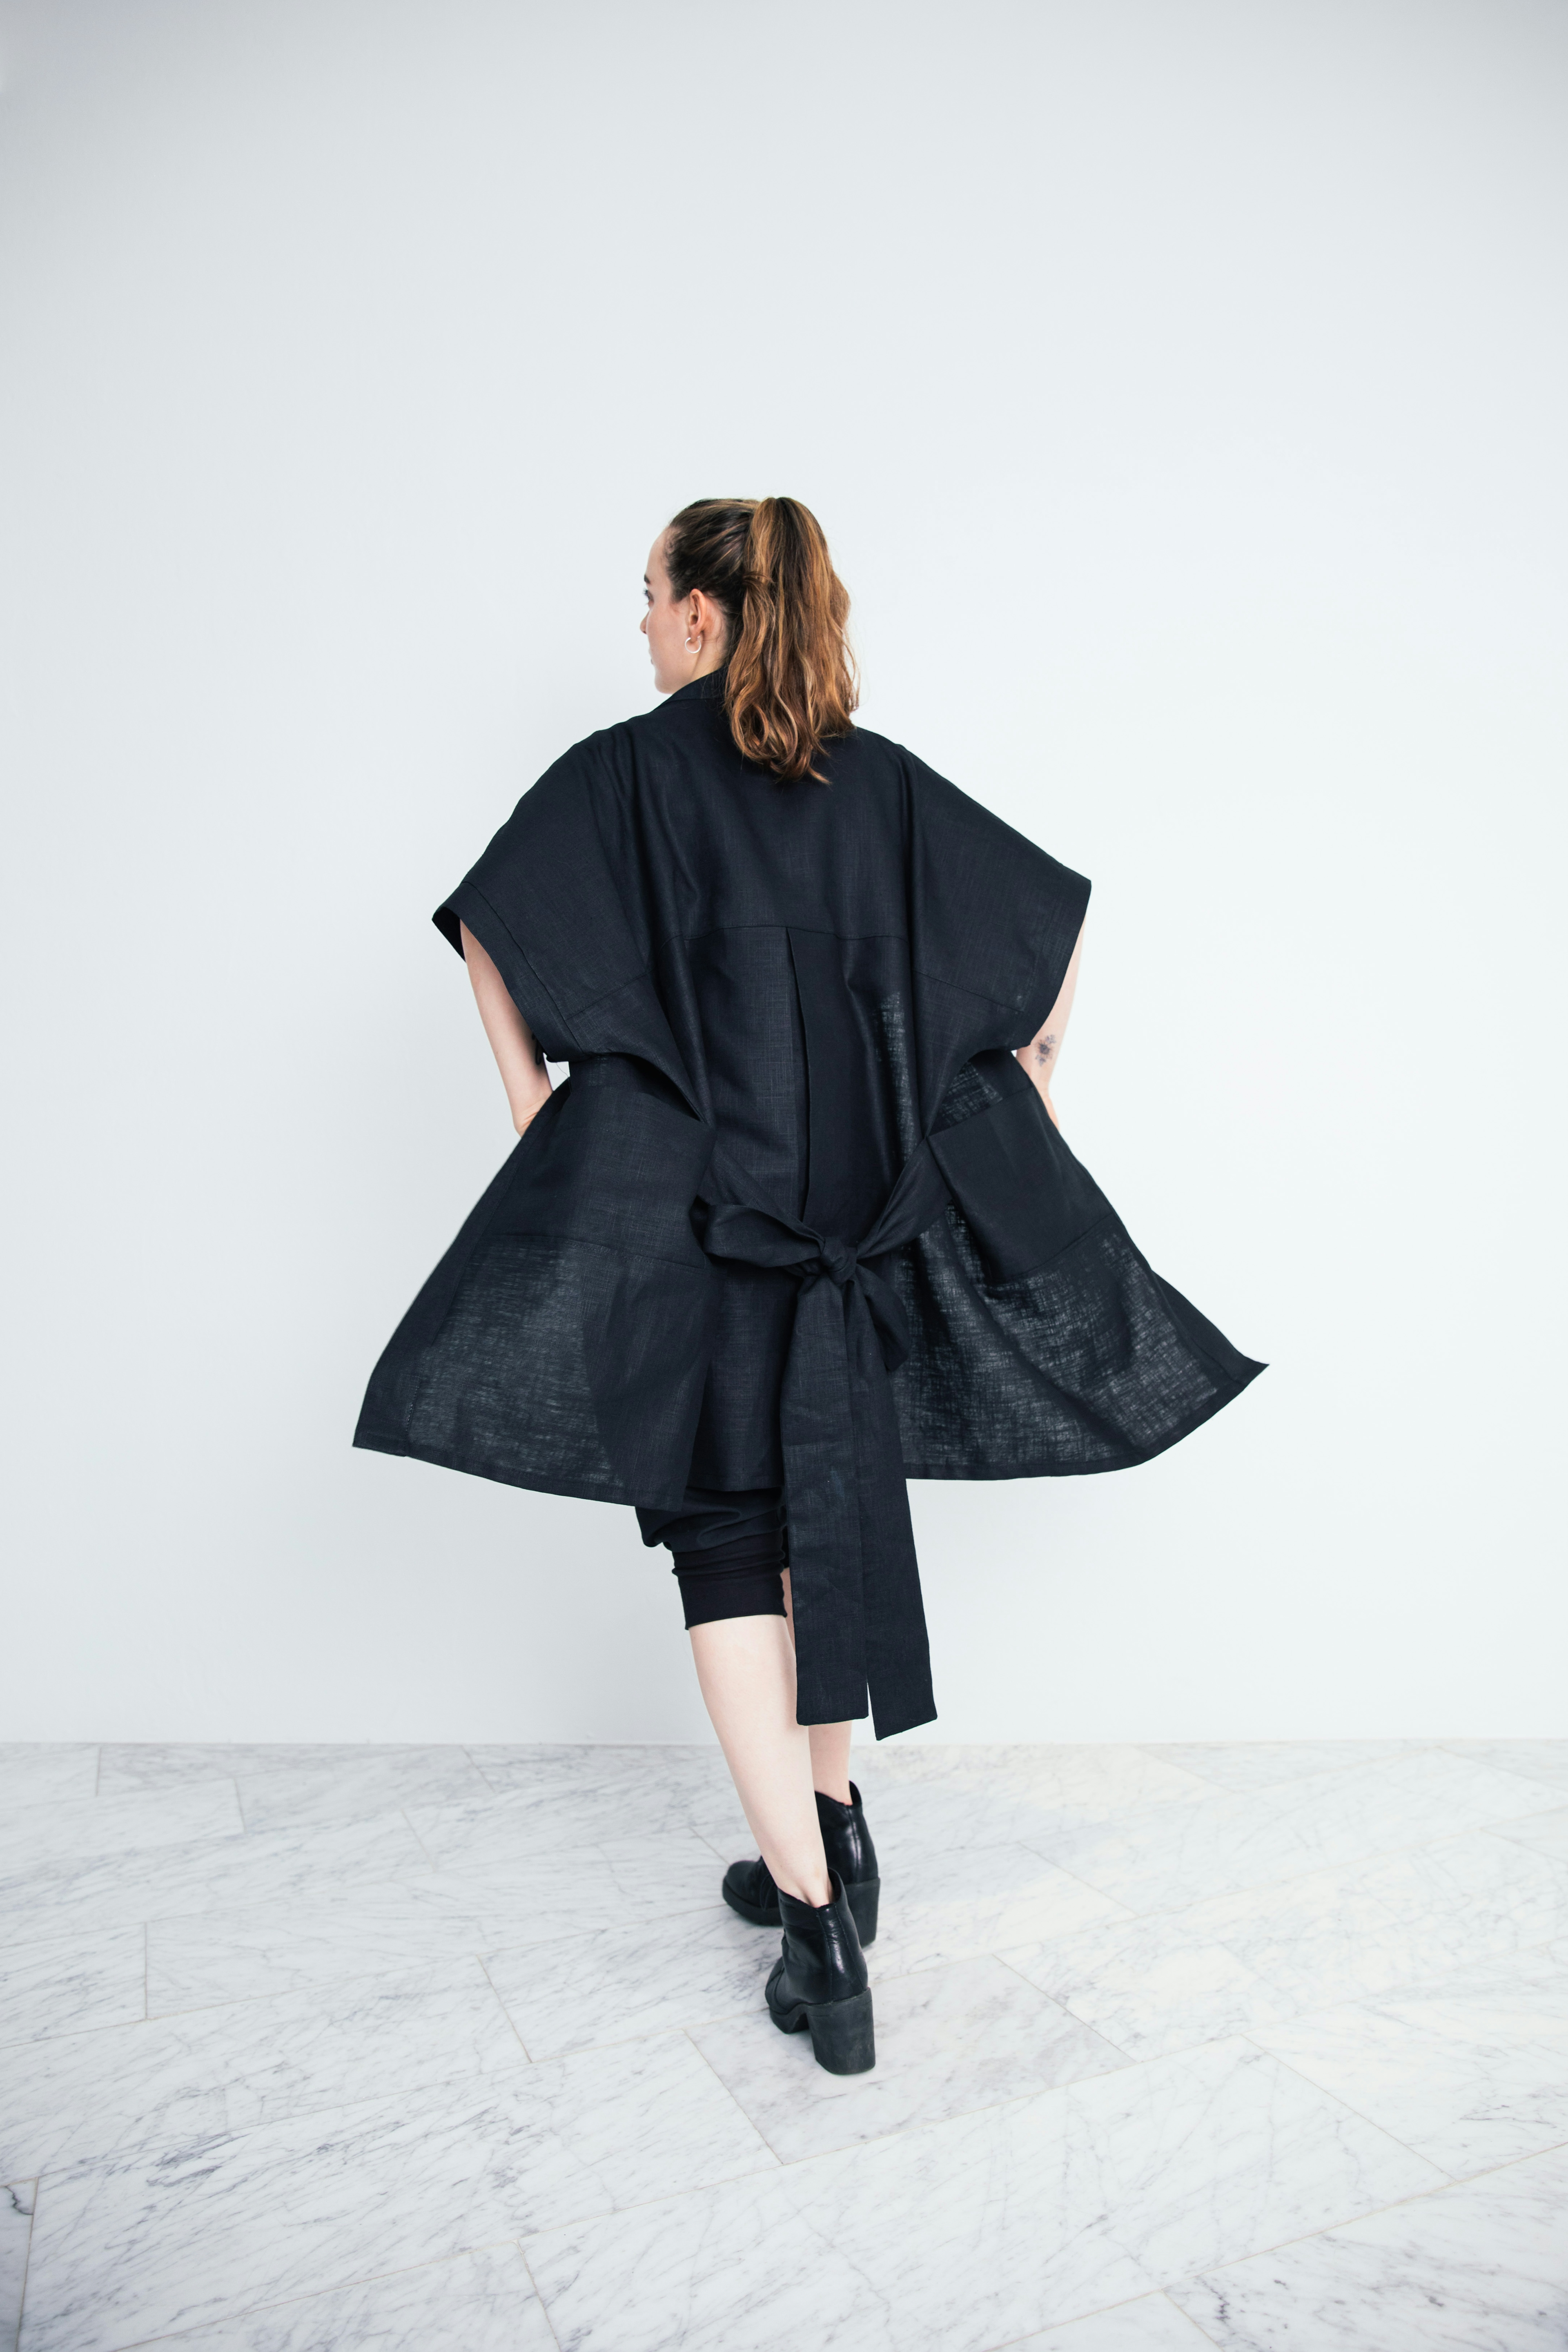 Svartbysvart originals Kimono.
Unisex, made in Reykjavík out of 100% sustainable linen